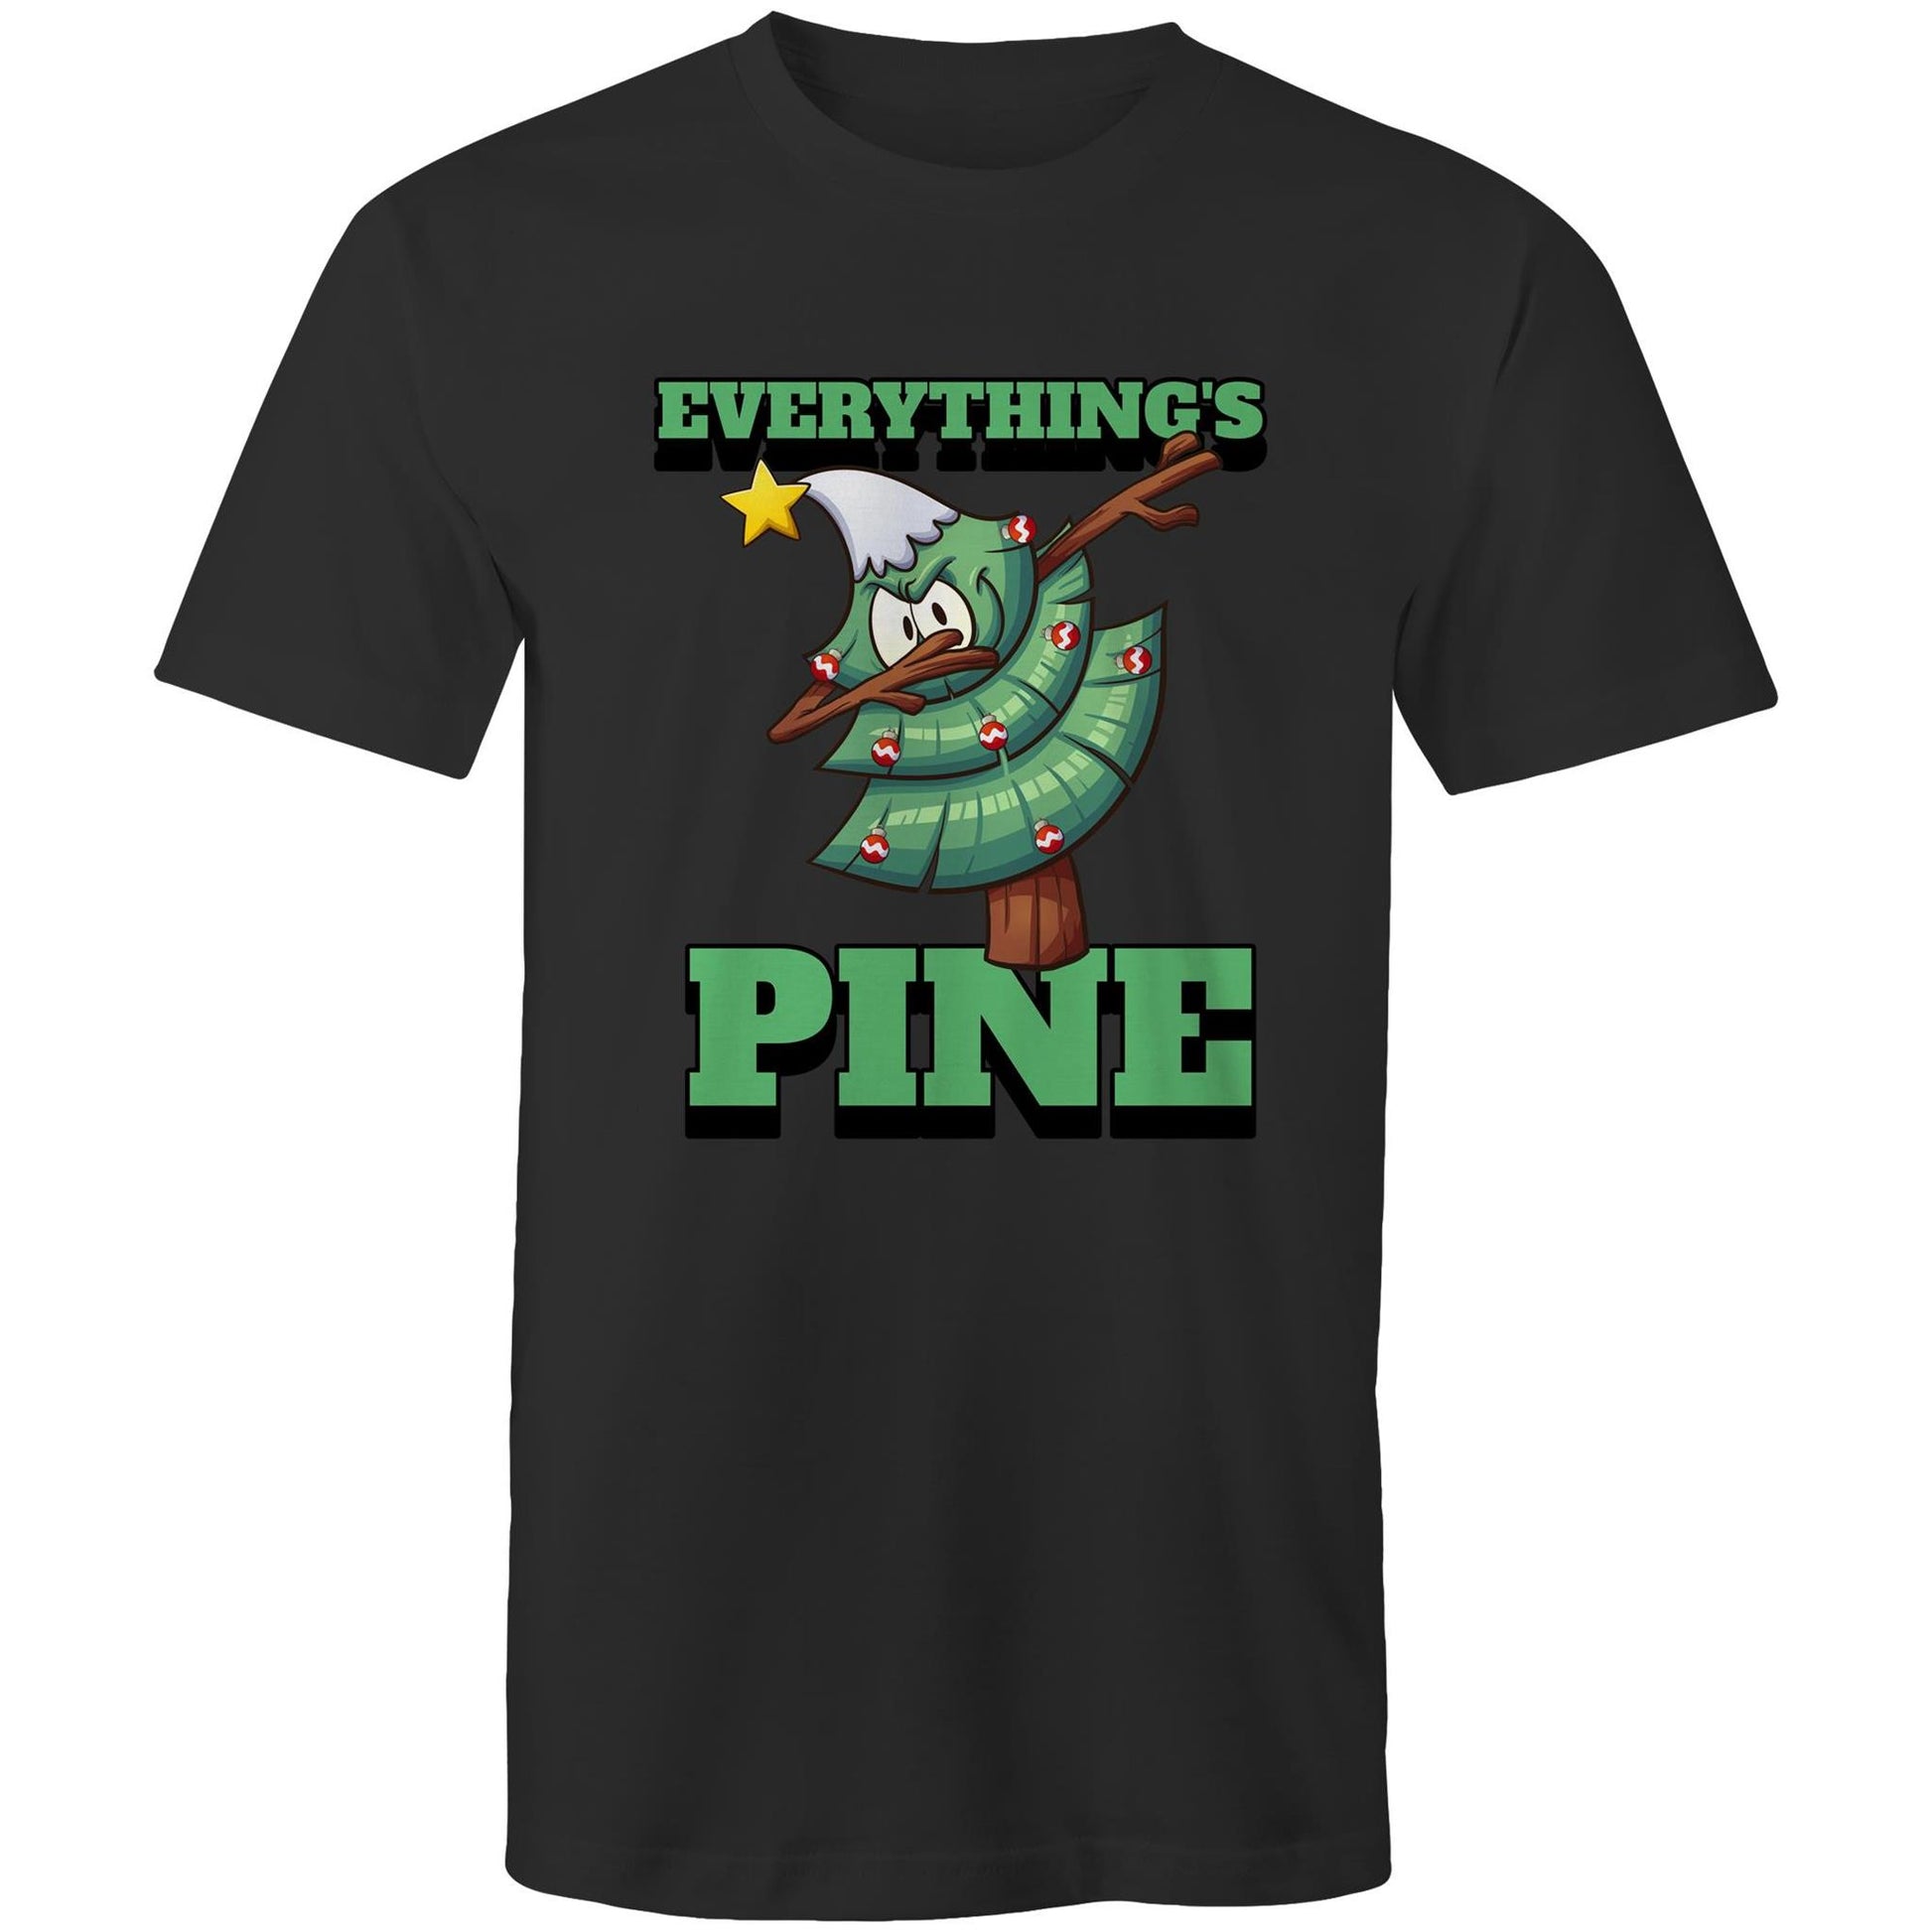 Everything's Pine - Mens T-Shirt Black Christmas Mens T-shirt Merry Christmas